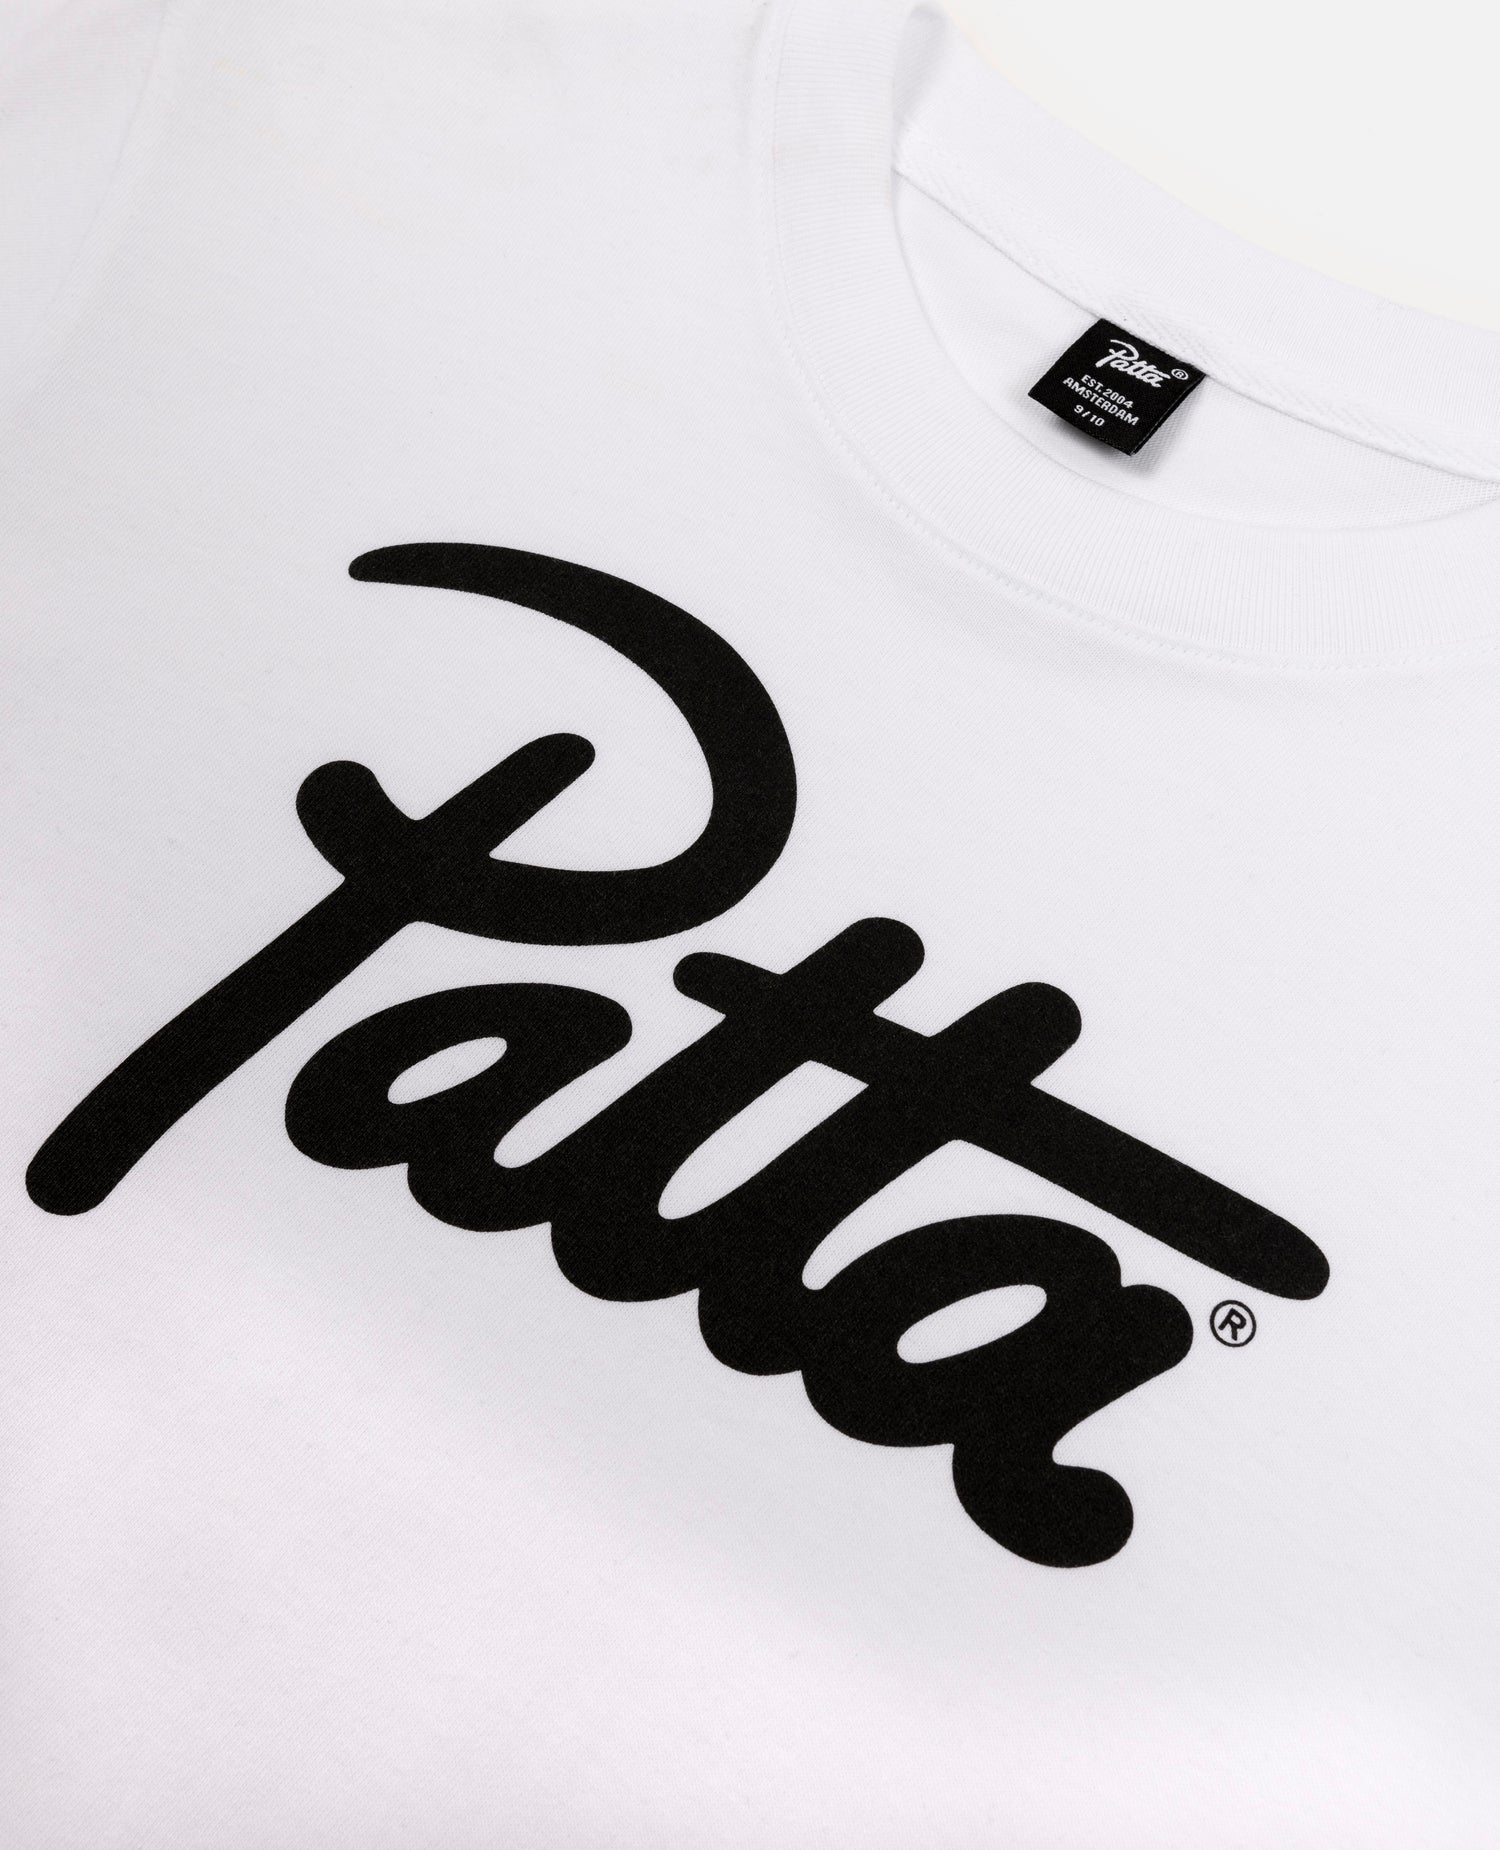 T-shirt avec logo Patta pour enfants (blanc)